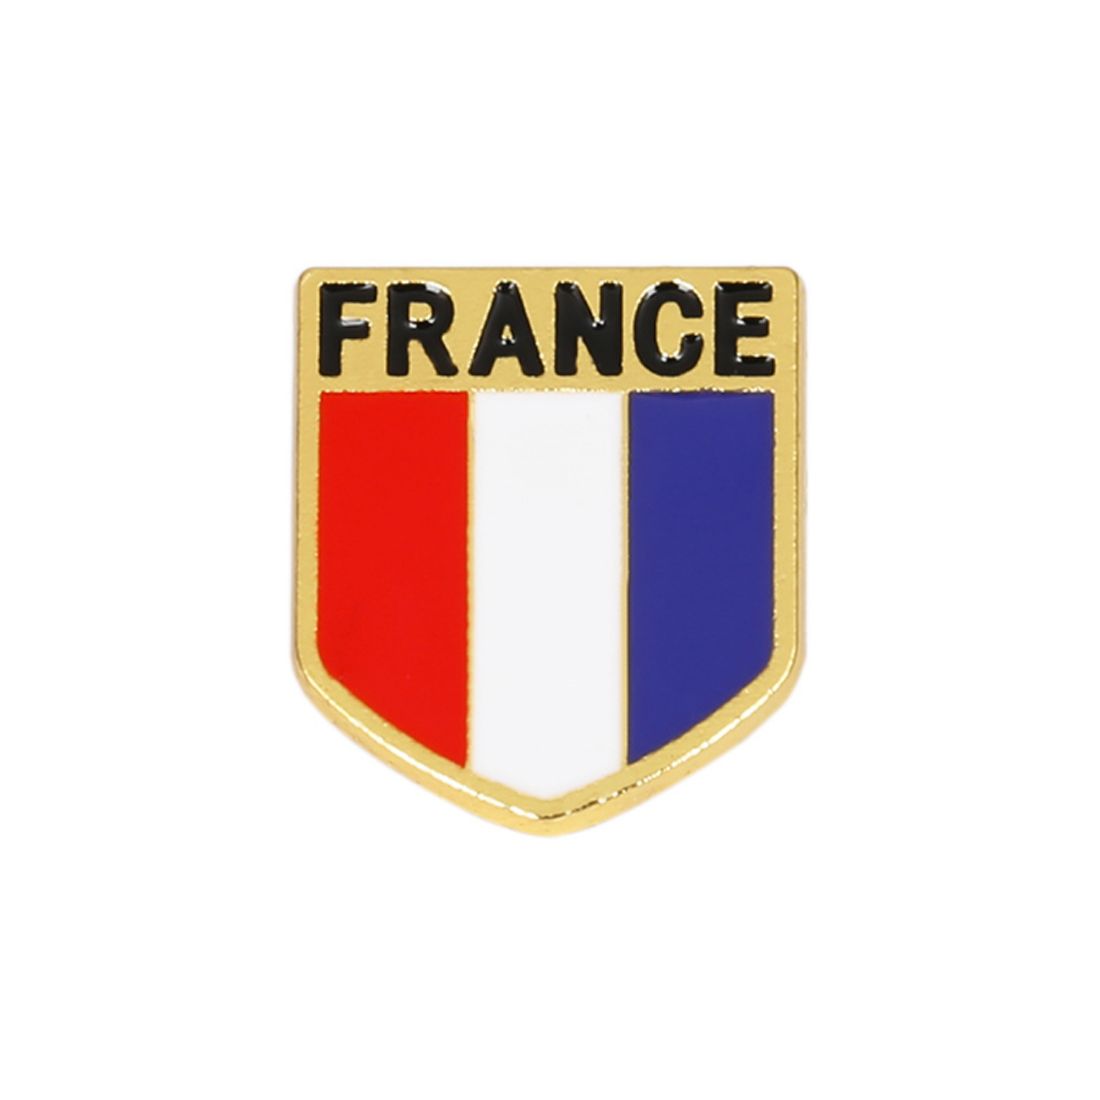 Pin's Ecusson drapeau France Clj Charles Le Jeune